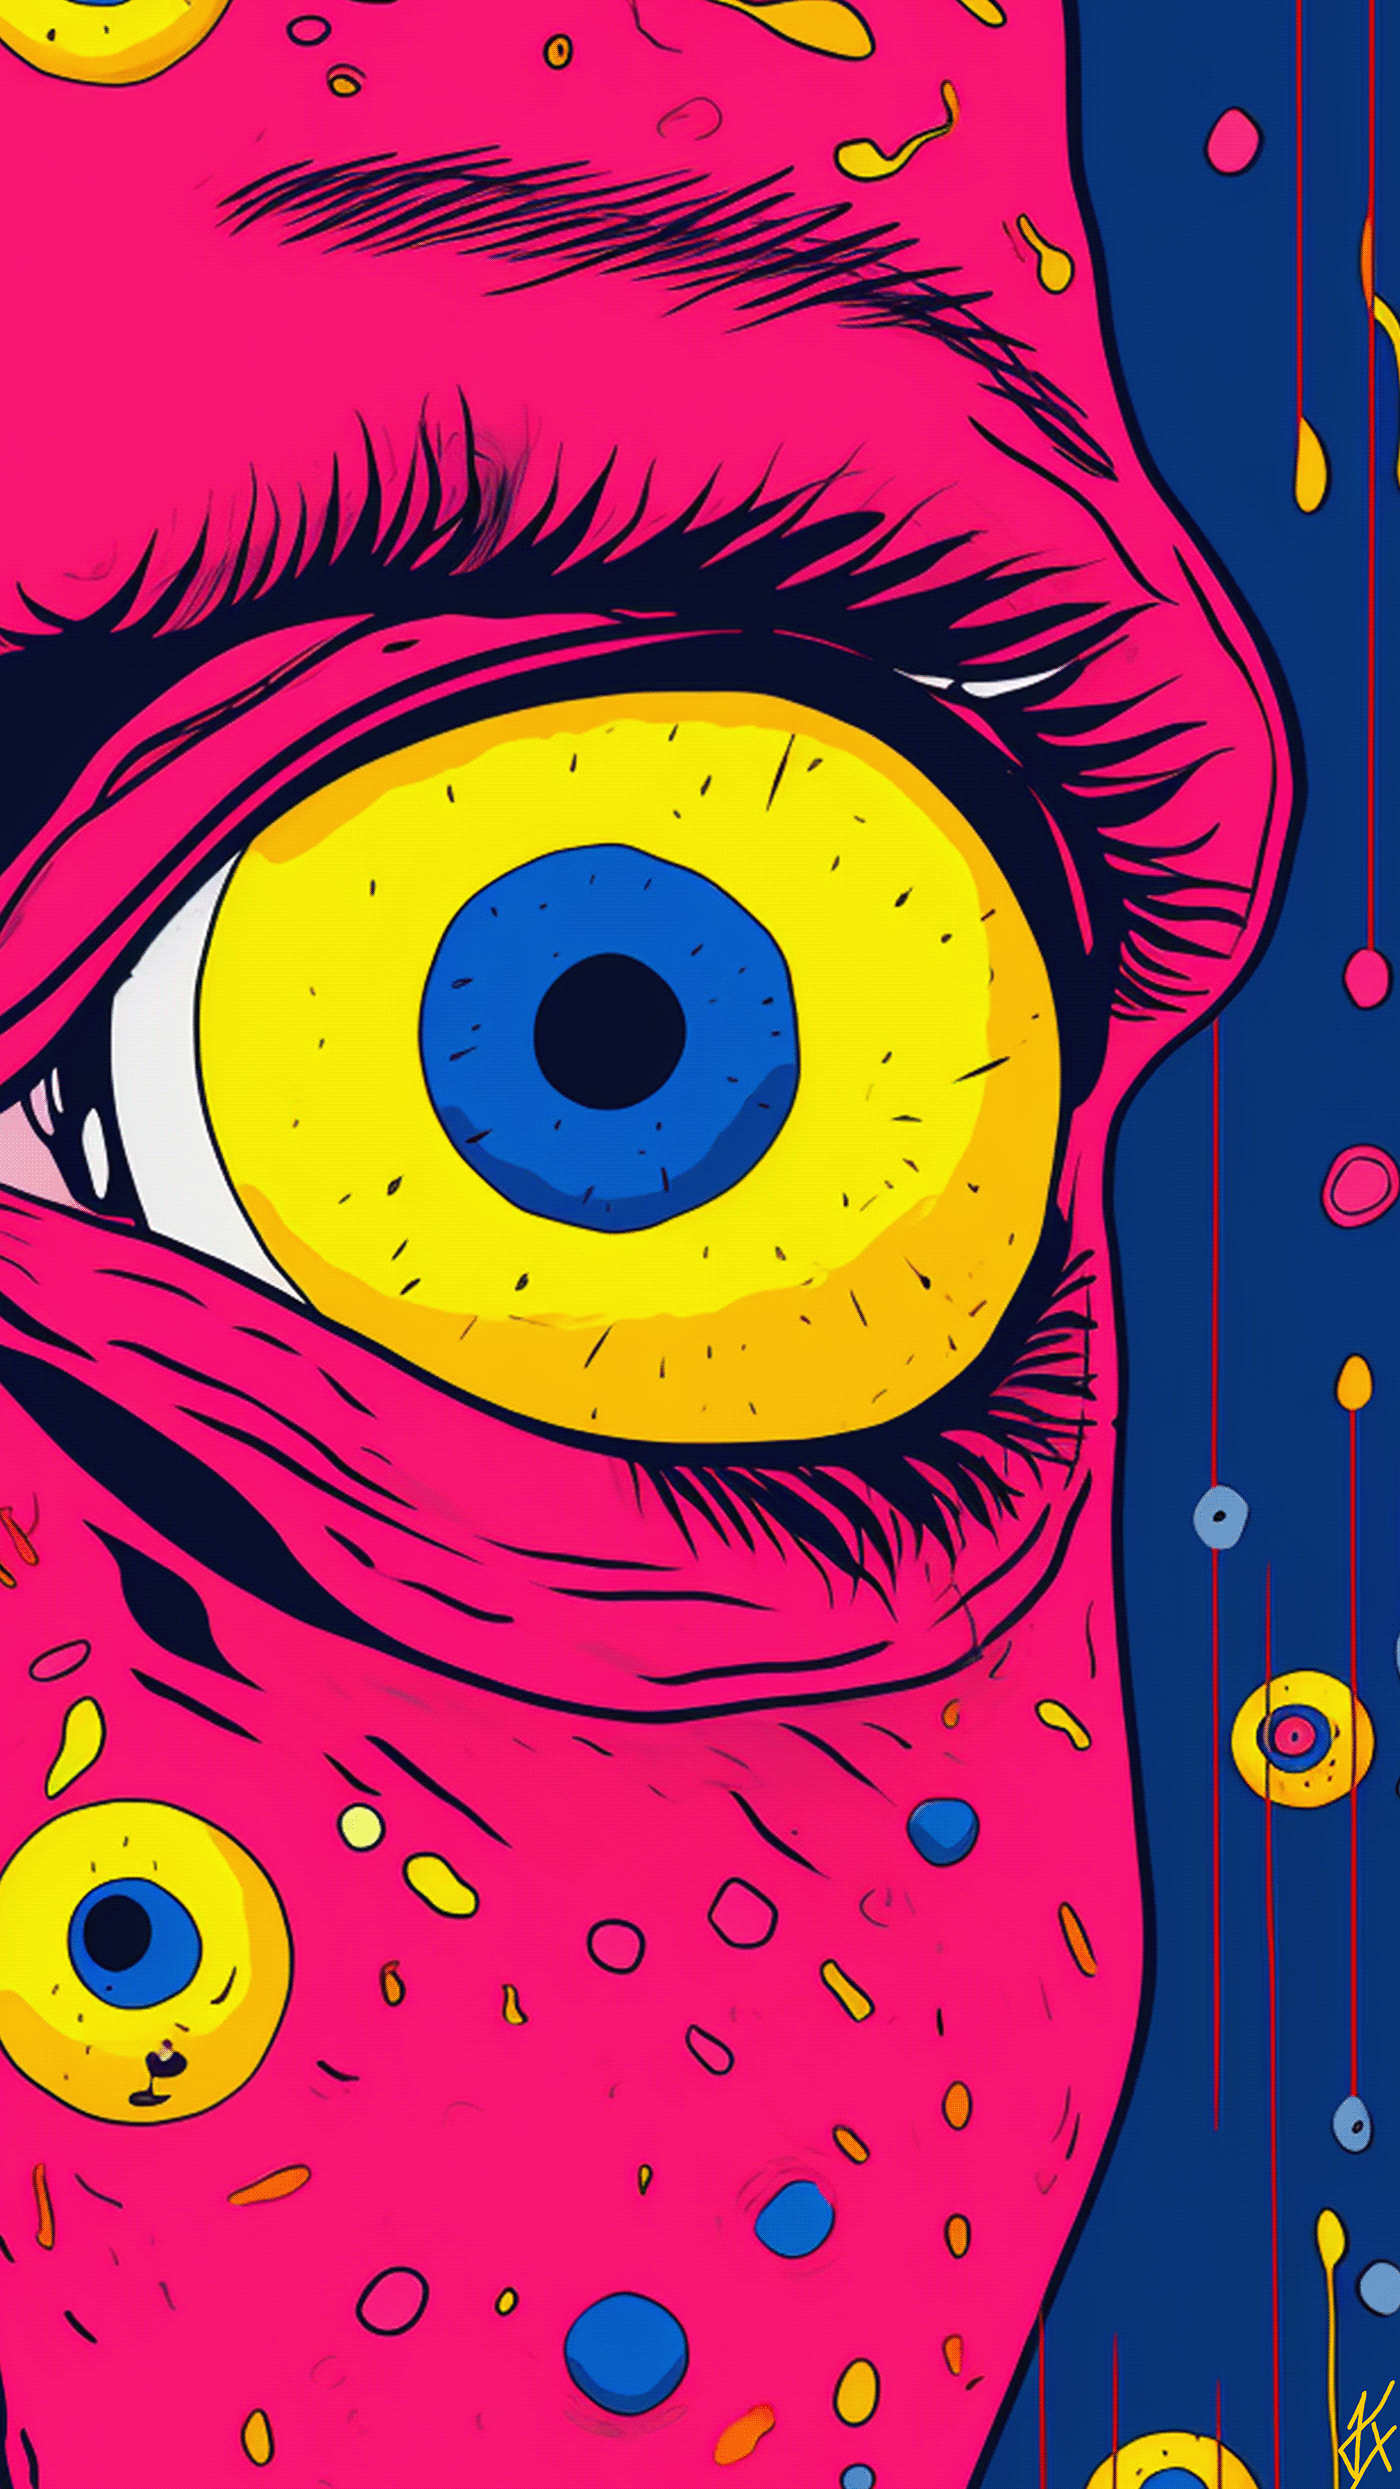 King Felix artwork painting   eyes poster design Unique imagination futuristic art surrealism